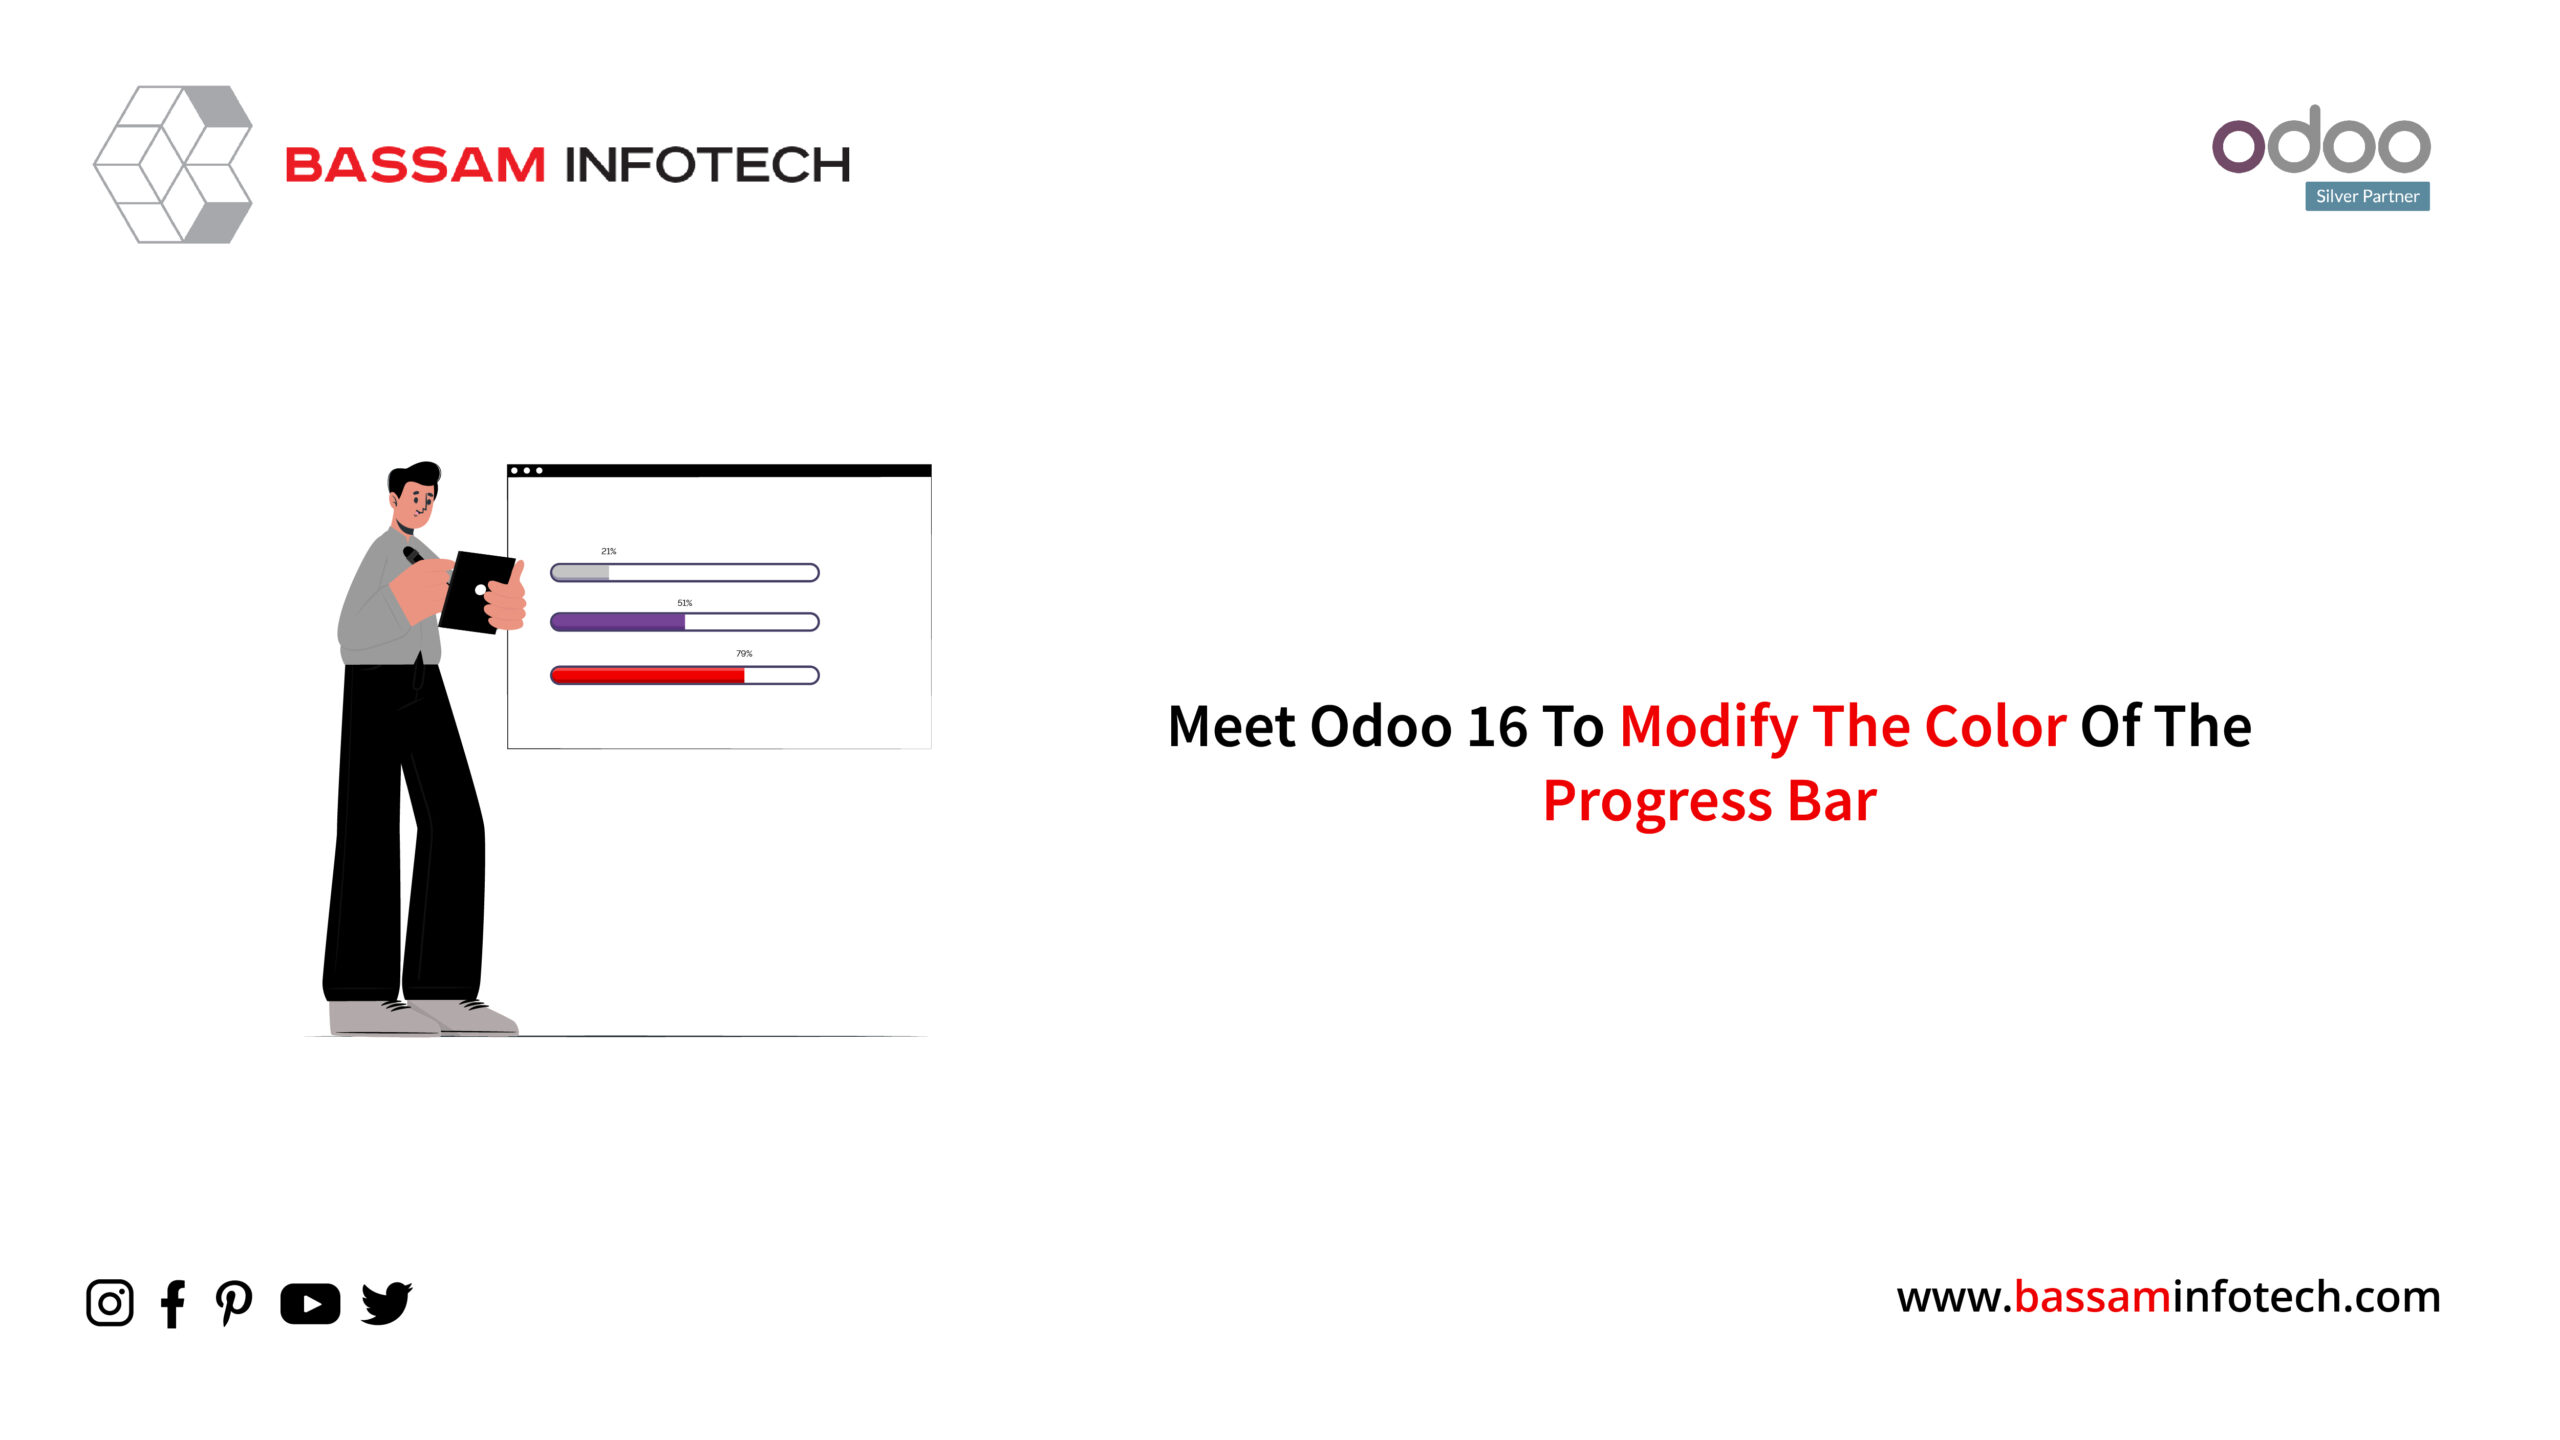 Meet Odoo 16 to Modify the Color of the Progress Bar